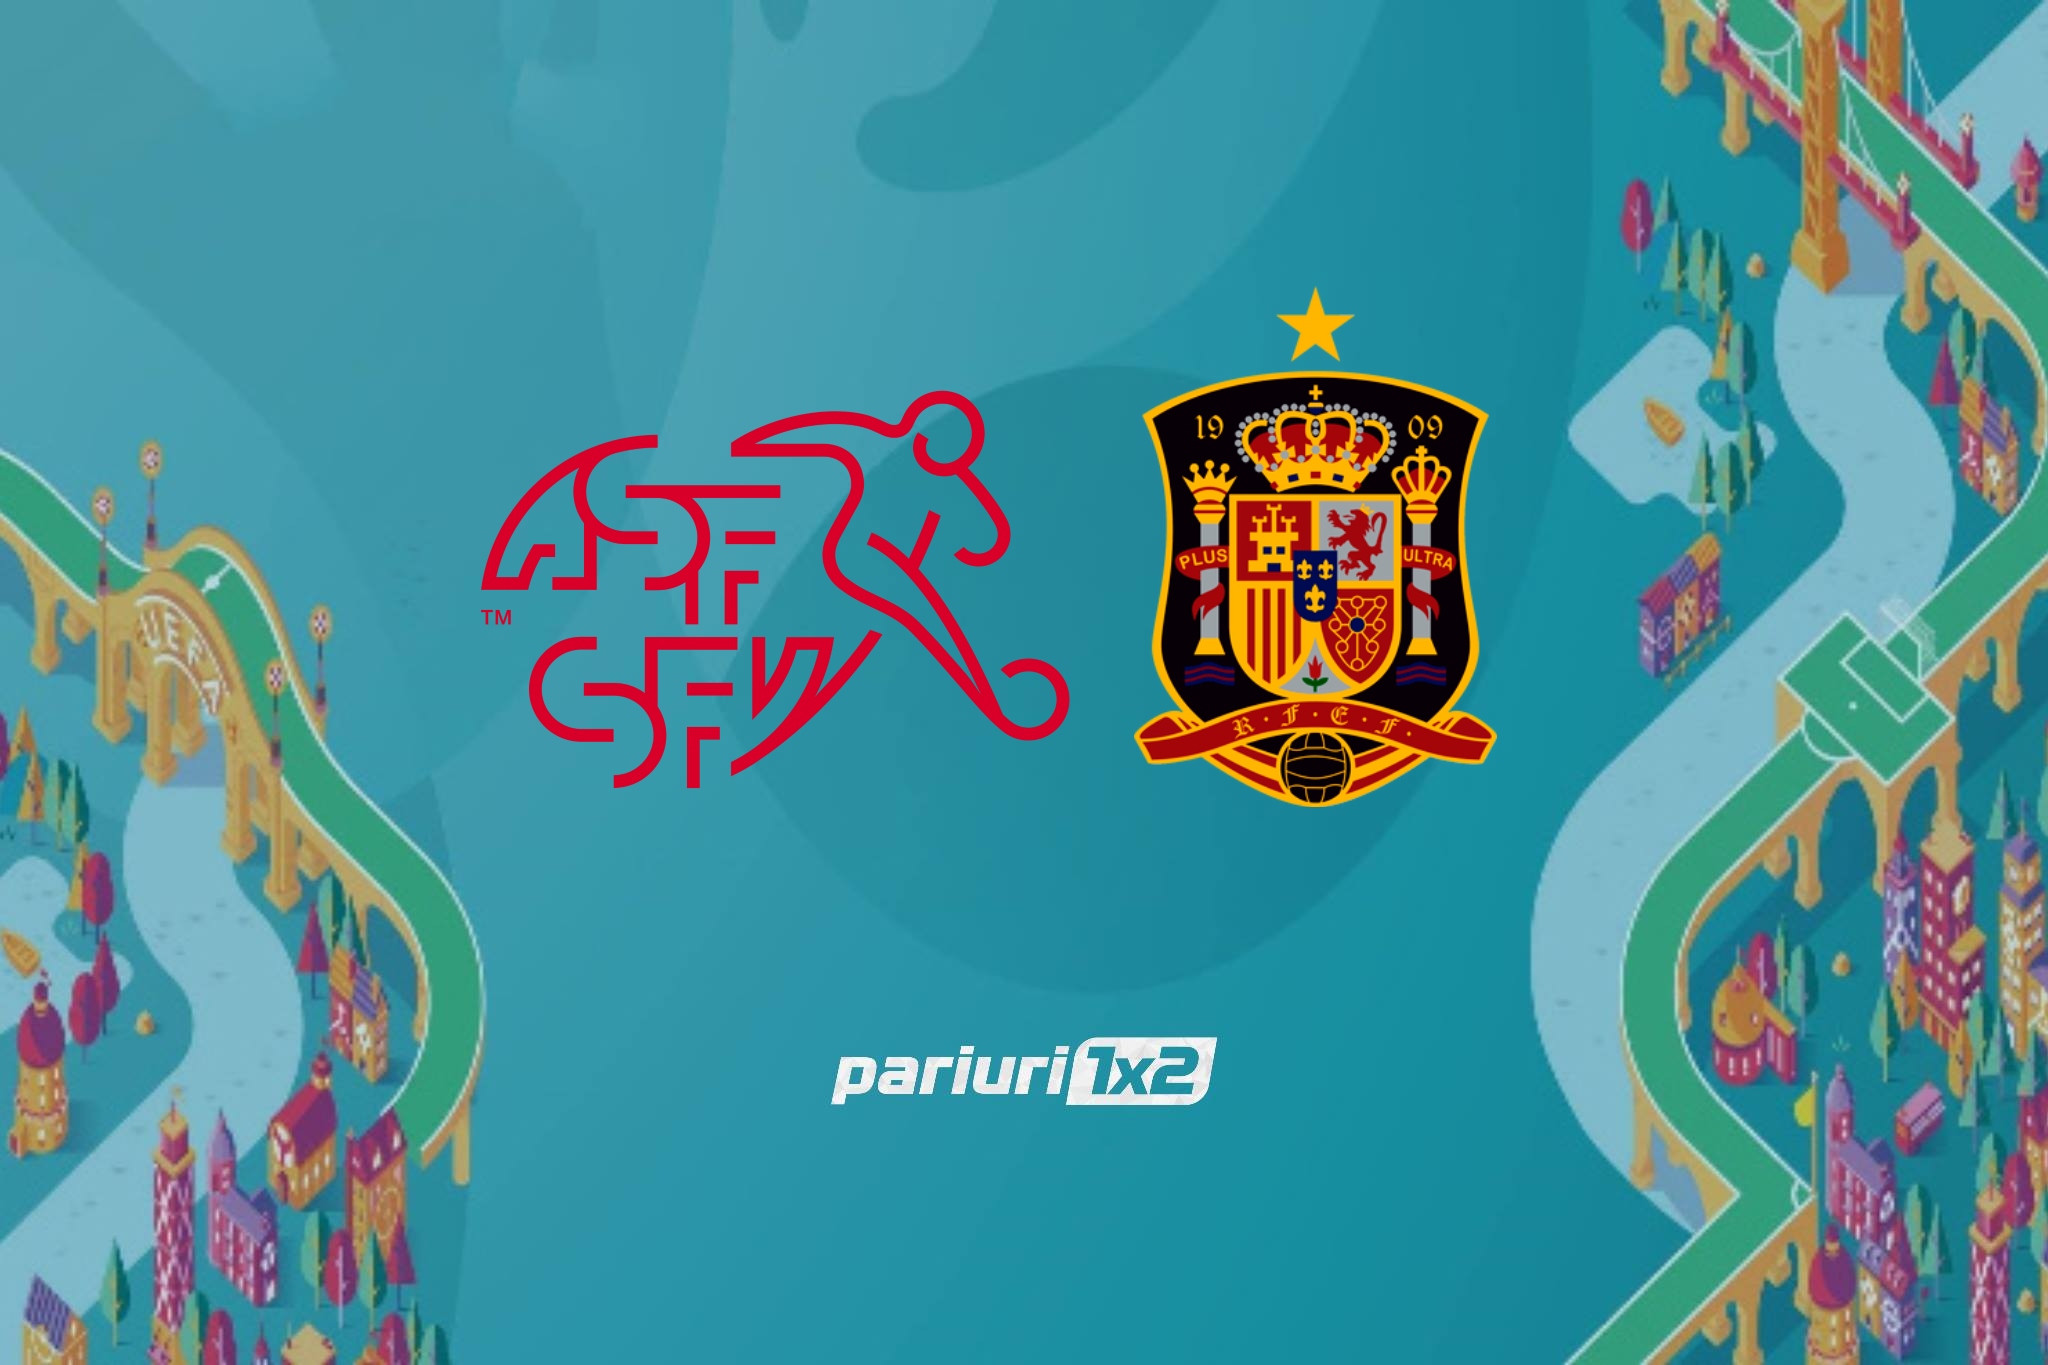 Ponturi bune Euro 2020 » Elvetia – Spania: Avem pariuri in cote de 1.85 si 2.00 pentru un meci inchis! Vezi selectiile marca Pariuri1x2!